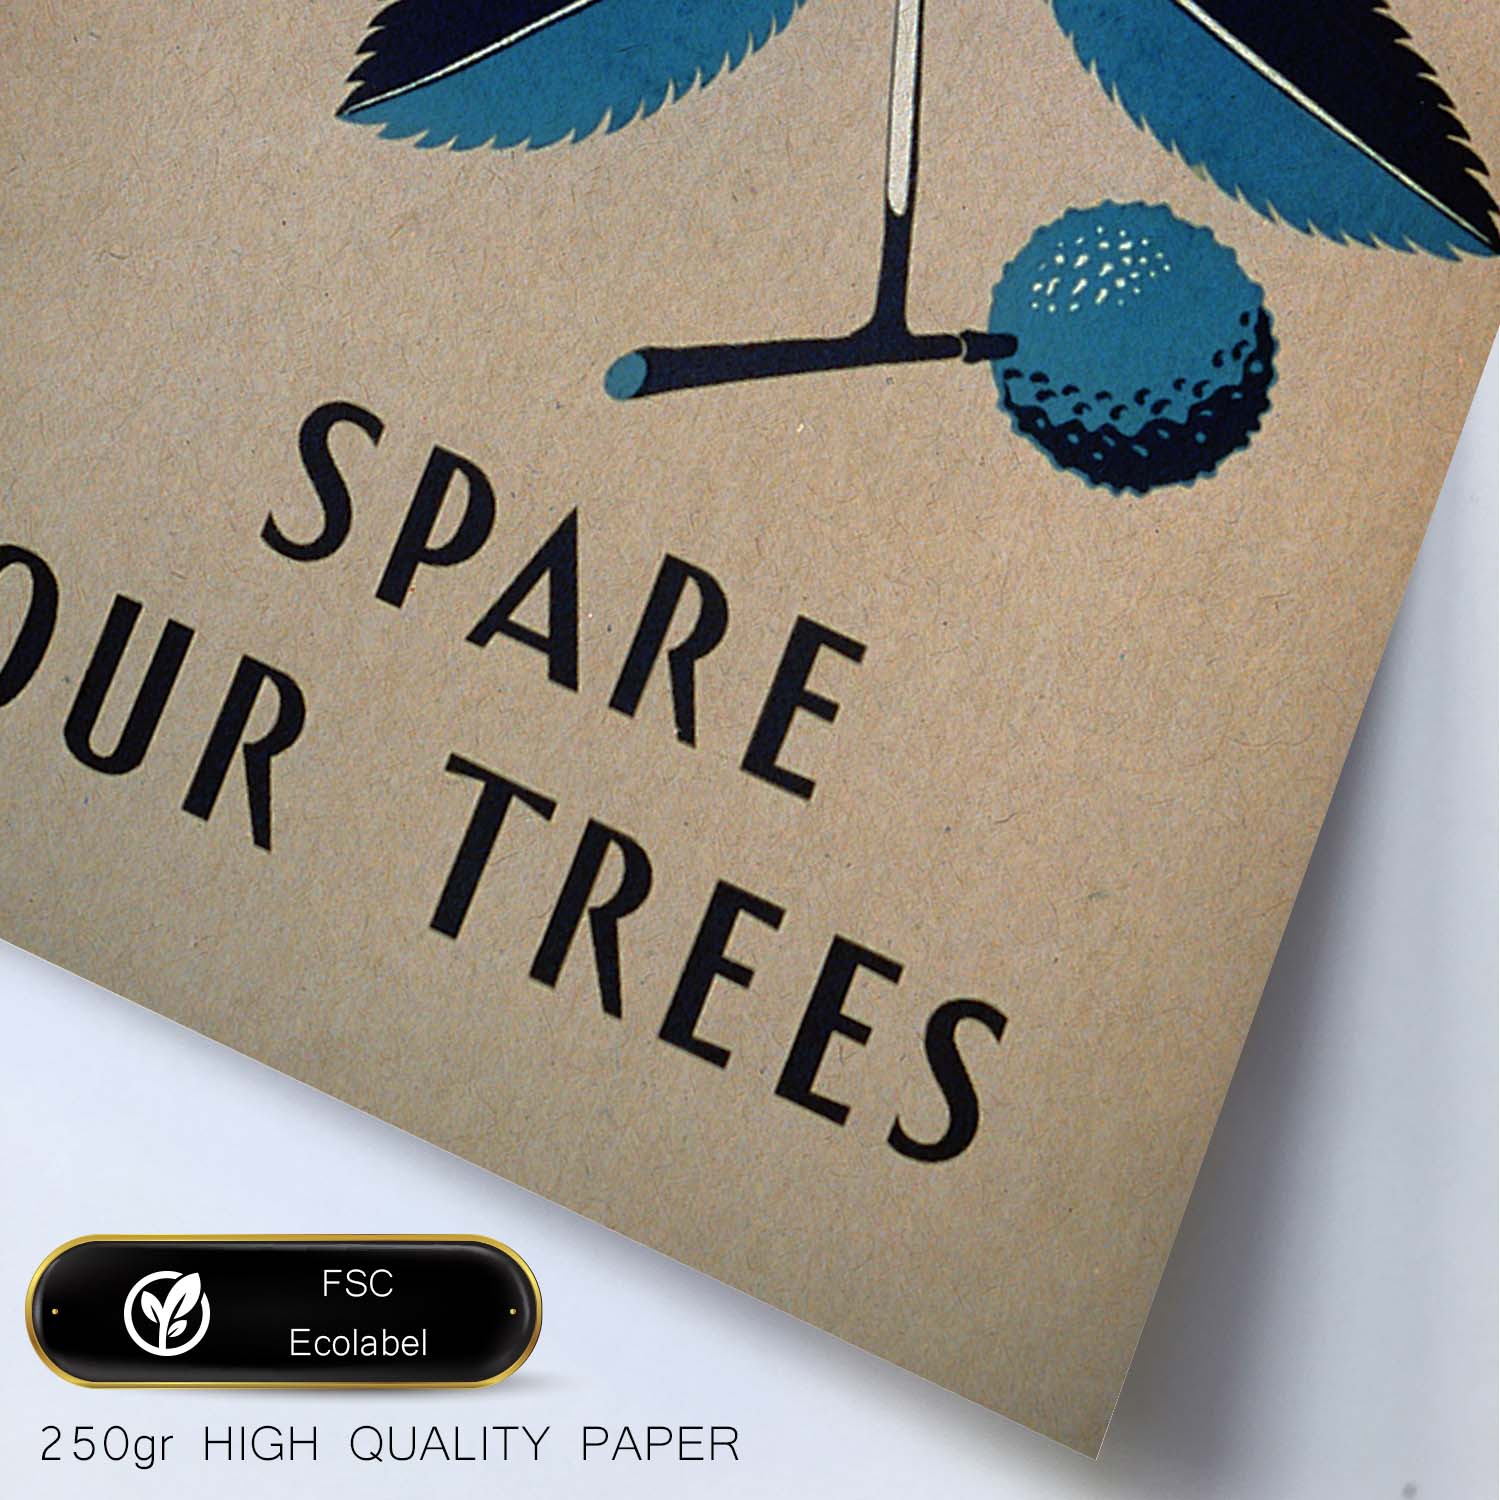 Poster vintage. Cartel vintage Spare our trees Ohio de 1938.-Artwork-Nacnic-Nacnic Estudio SL